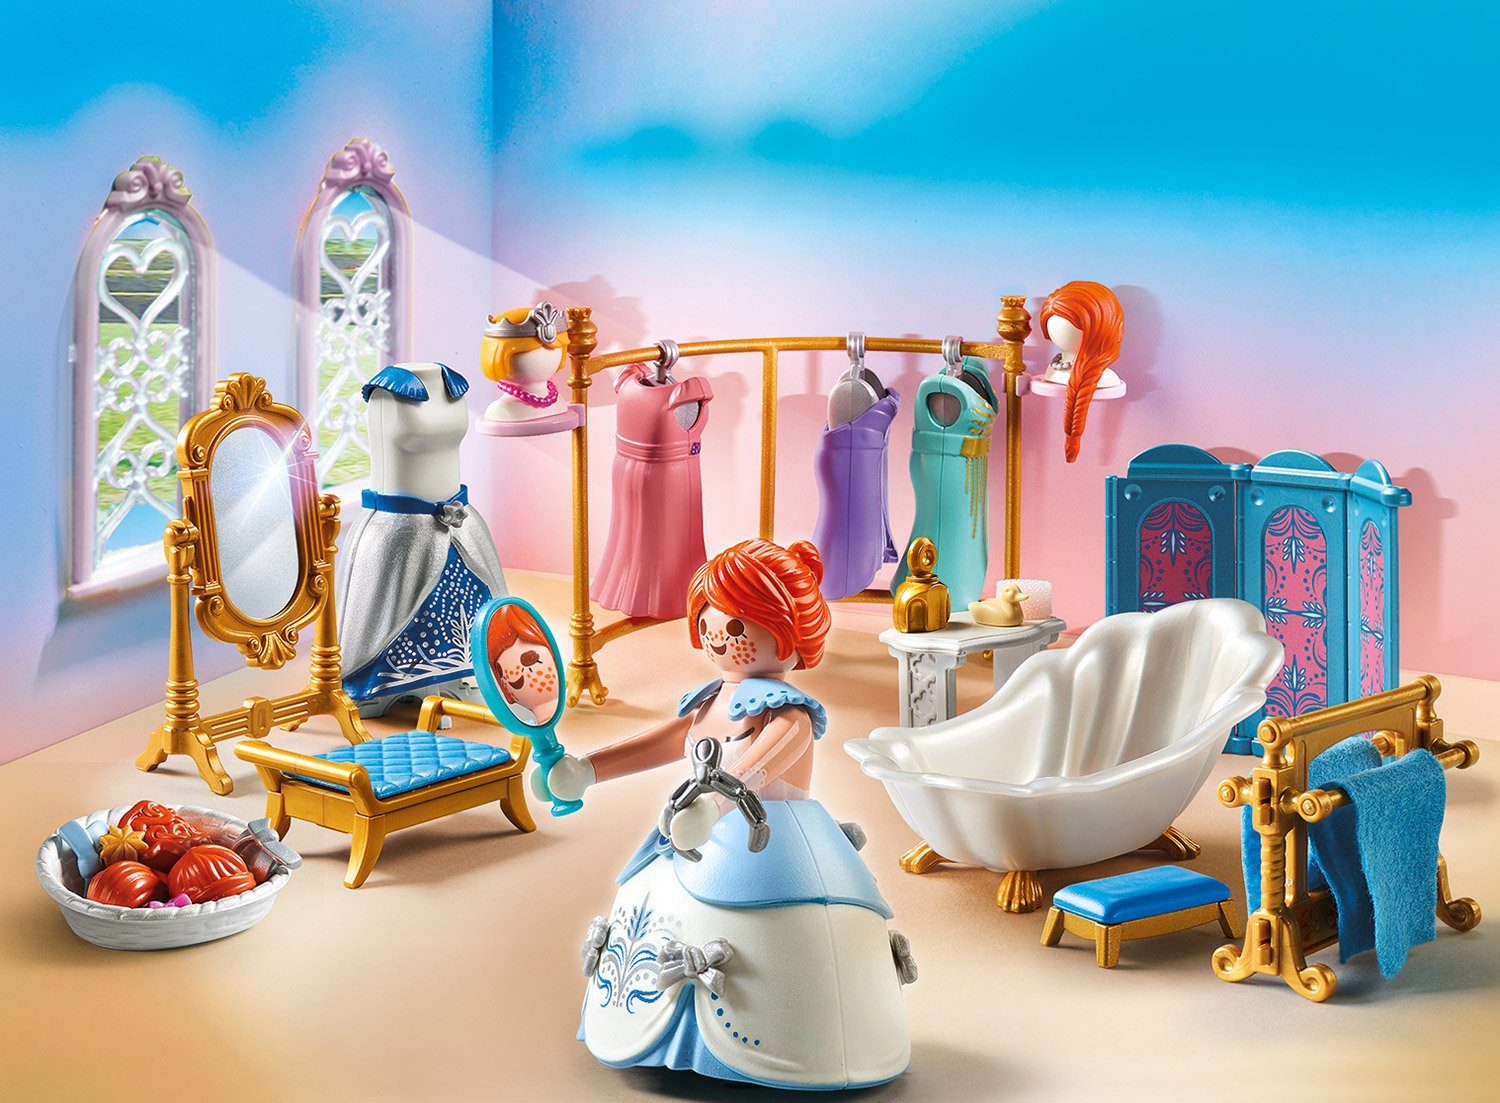 Playmobil® Badewanne in Made Princess, mit (86 Ankleidezimmer (70454), St), Konstruktions-Spielset Germany